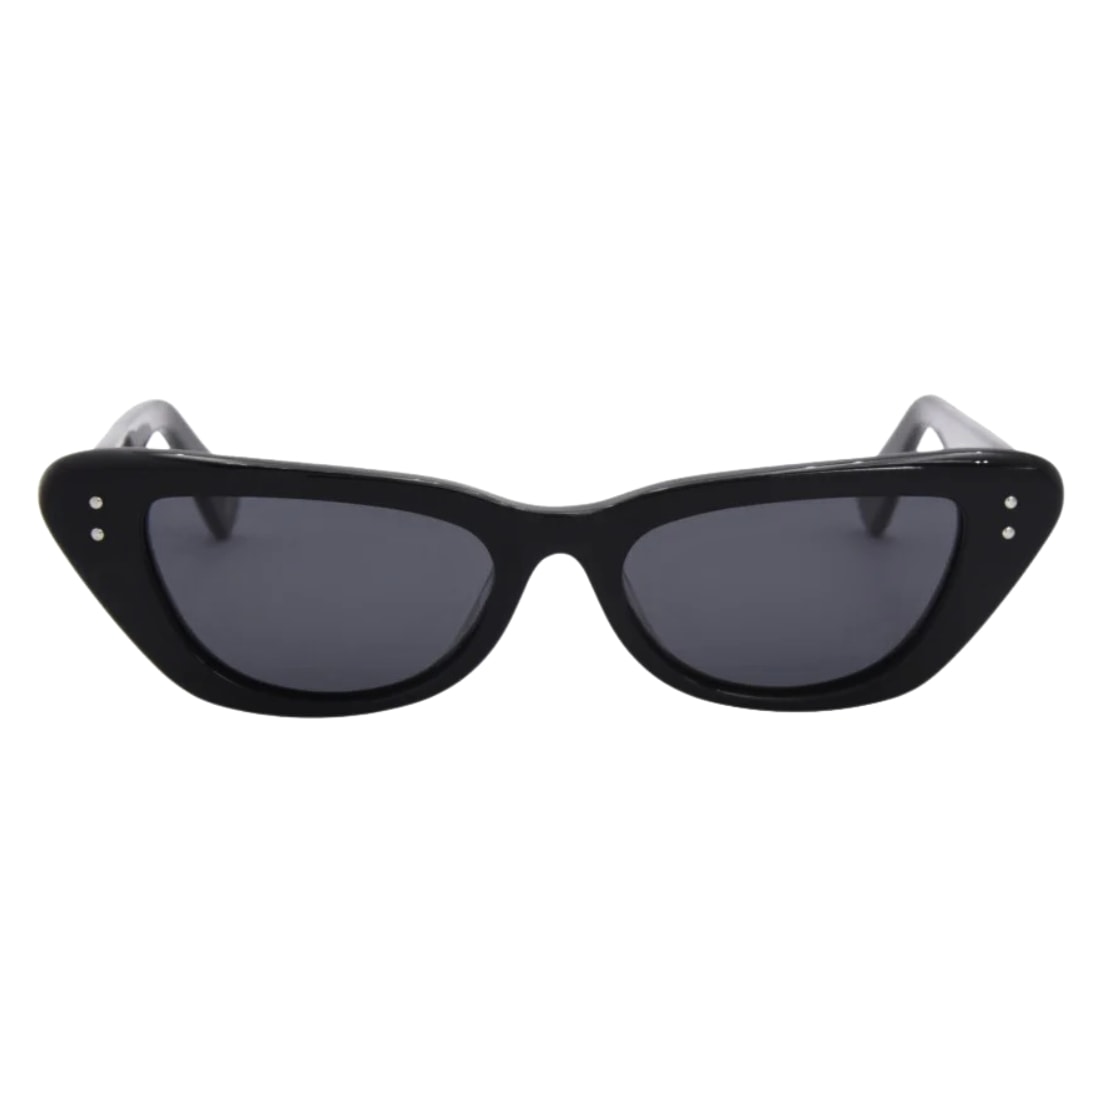 I-Sea Astrid Sunglasses - Black/Smoke Polarised - Square/Rectangular Sunglasses by I-Sea